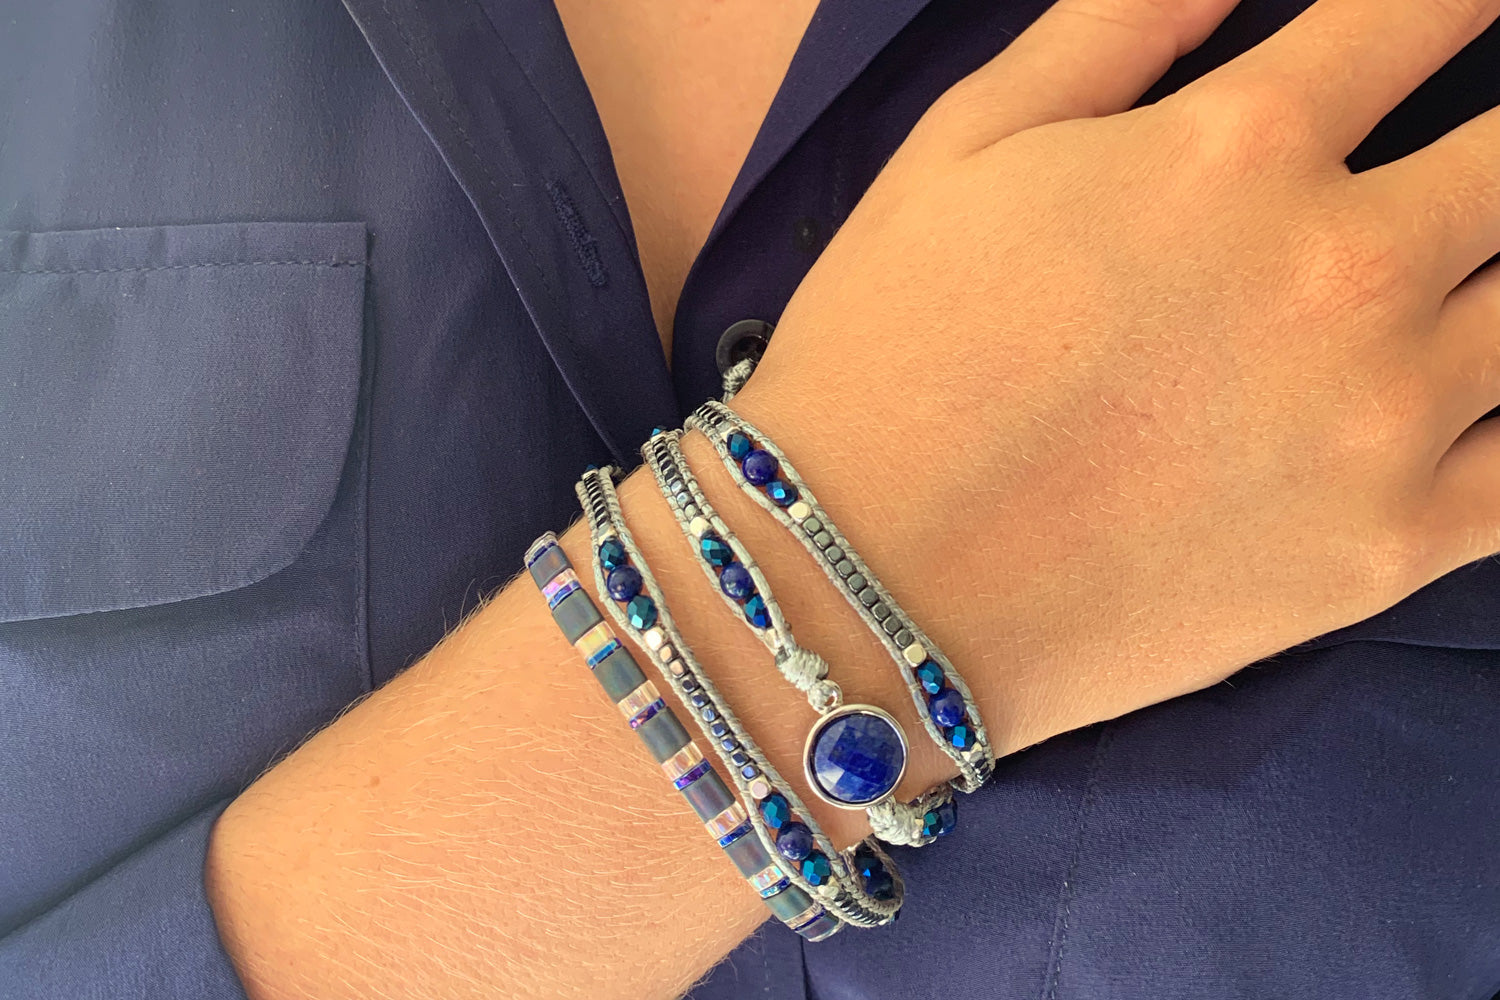 America Blue Lapis Lazuli Gemstone Wrap Bracelet - Boho Betty